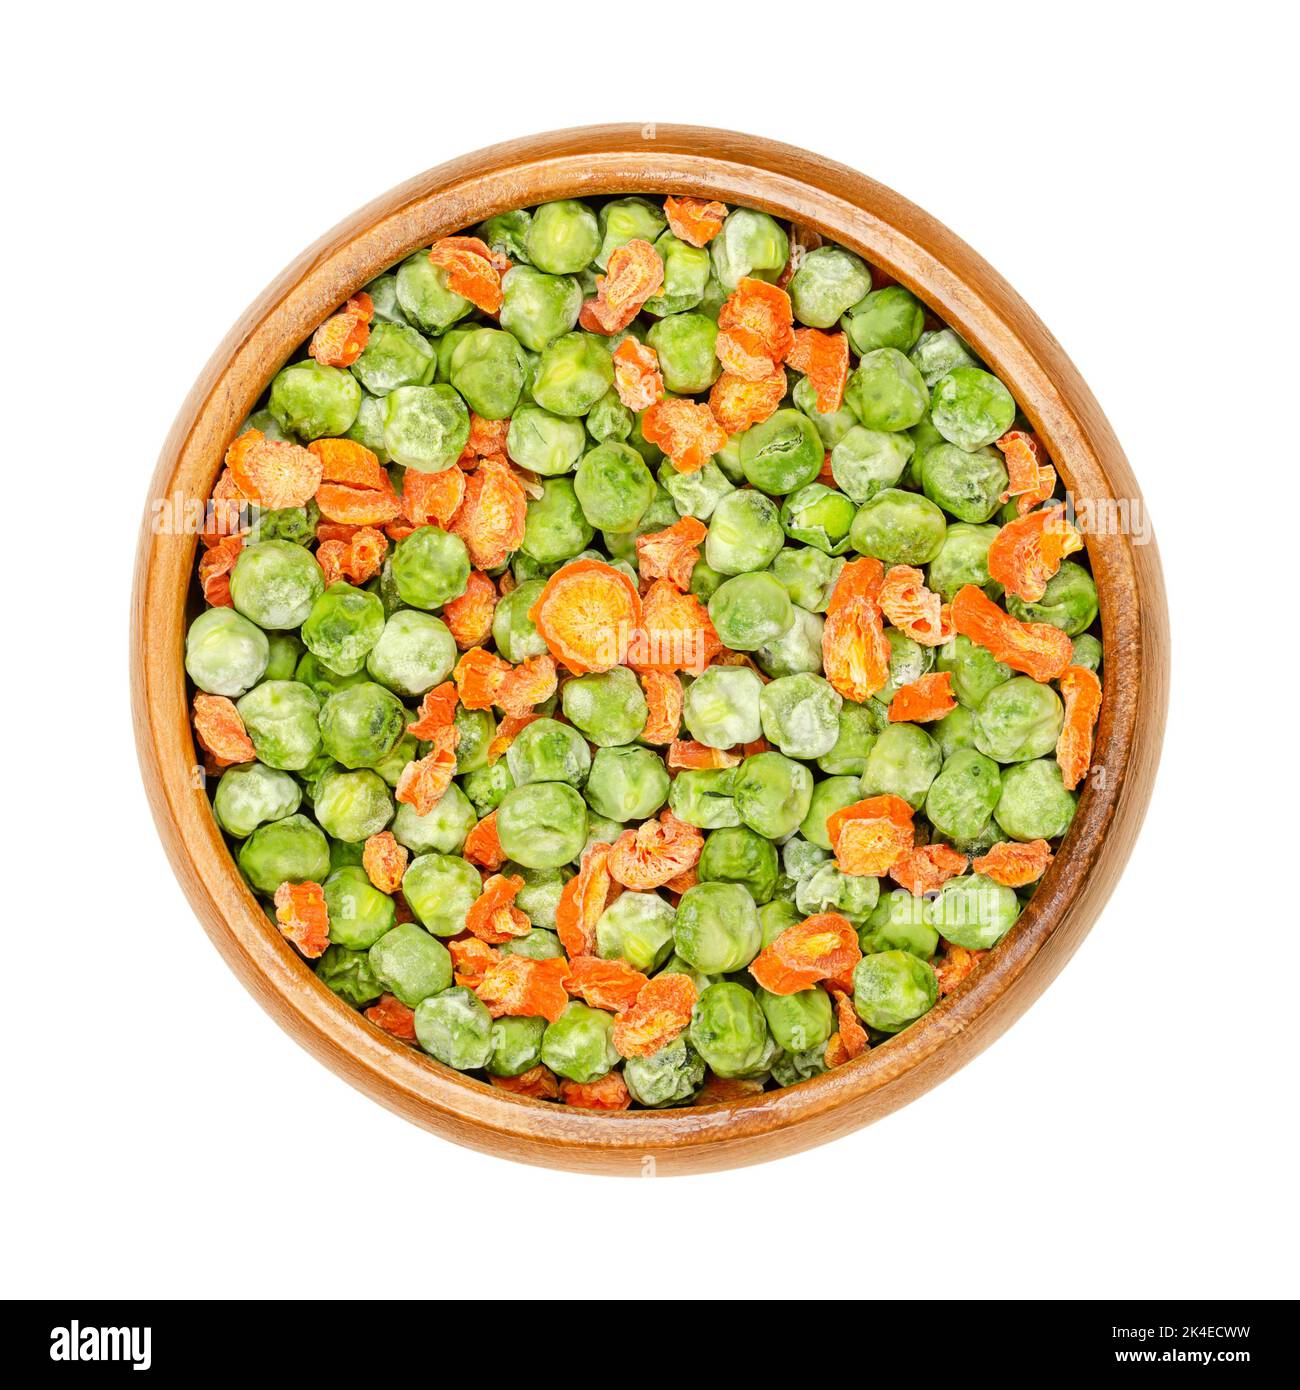 Piselli verdi disidratati e pezzi di carota in una ciotola di legno. Verdure miste. Semi di frutti a baccello Pisum sativum, e carote d'arancia tagliate, carota di Daucus. Foto Stock